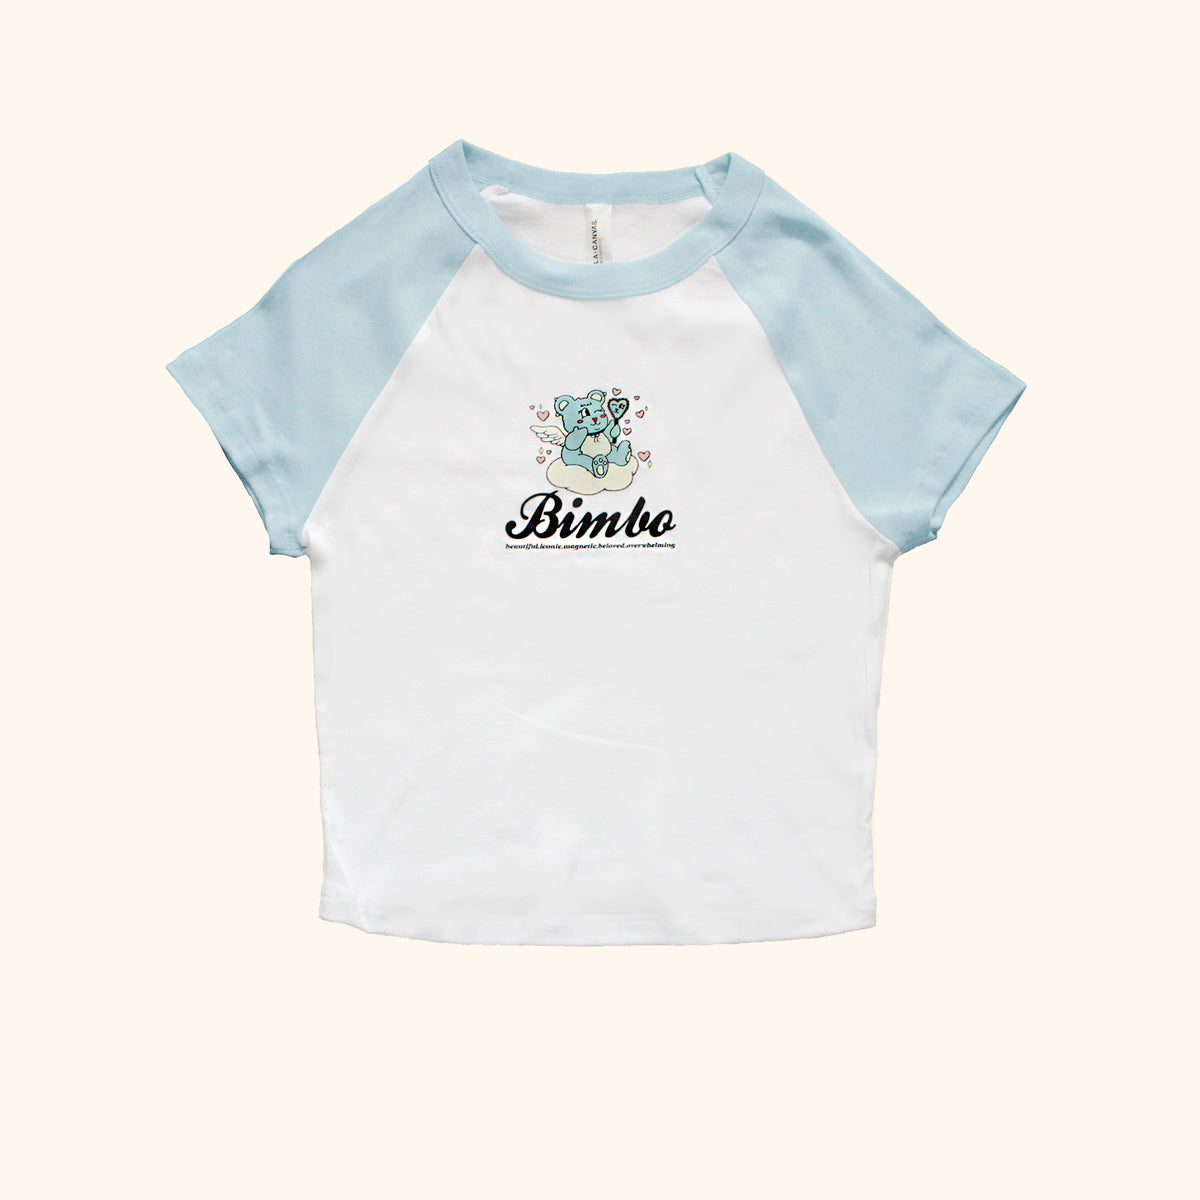 Y2K BIMBO Baby Tee | Baby Blue Cap Sleeve T-Shirt + Colorful Graphic